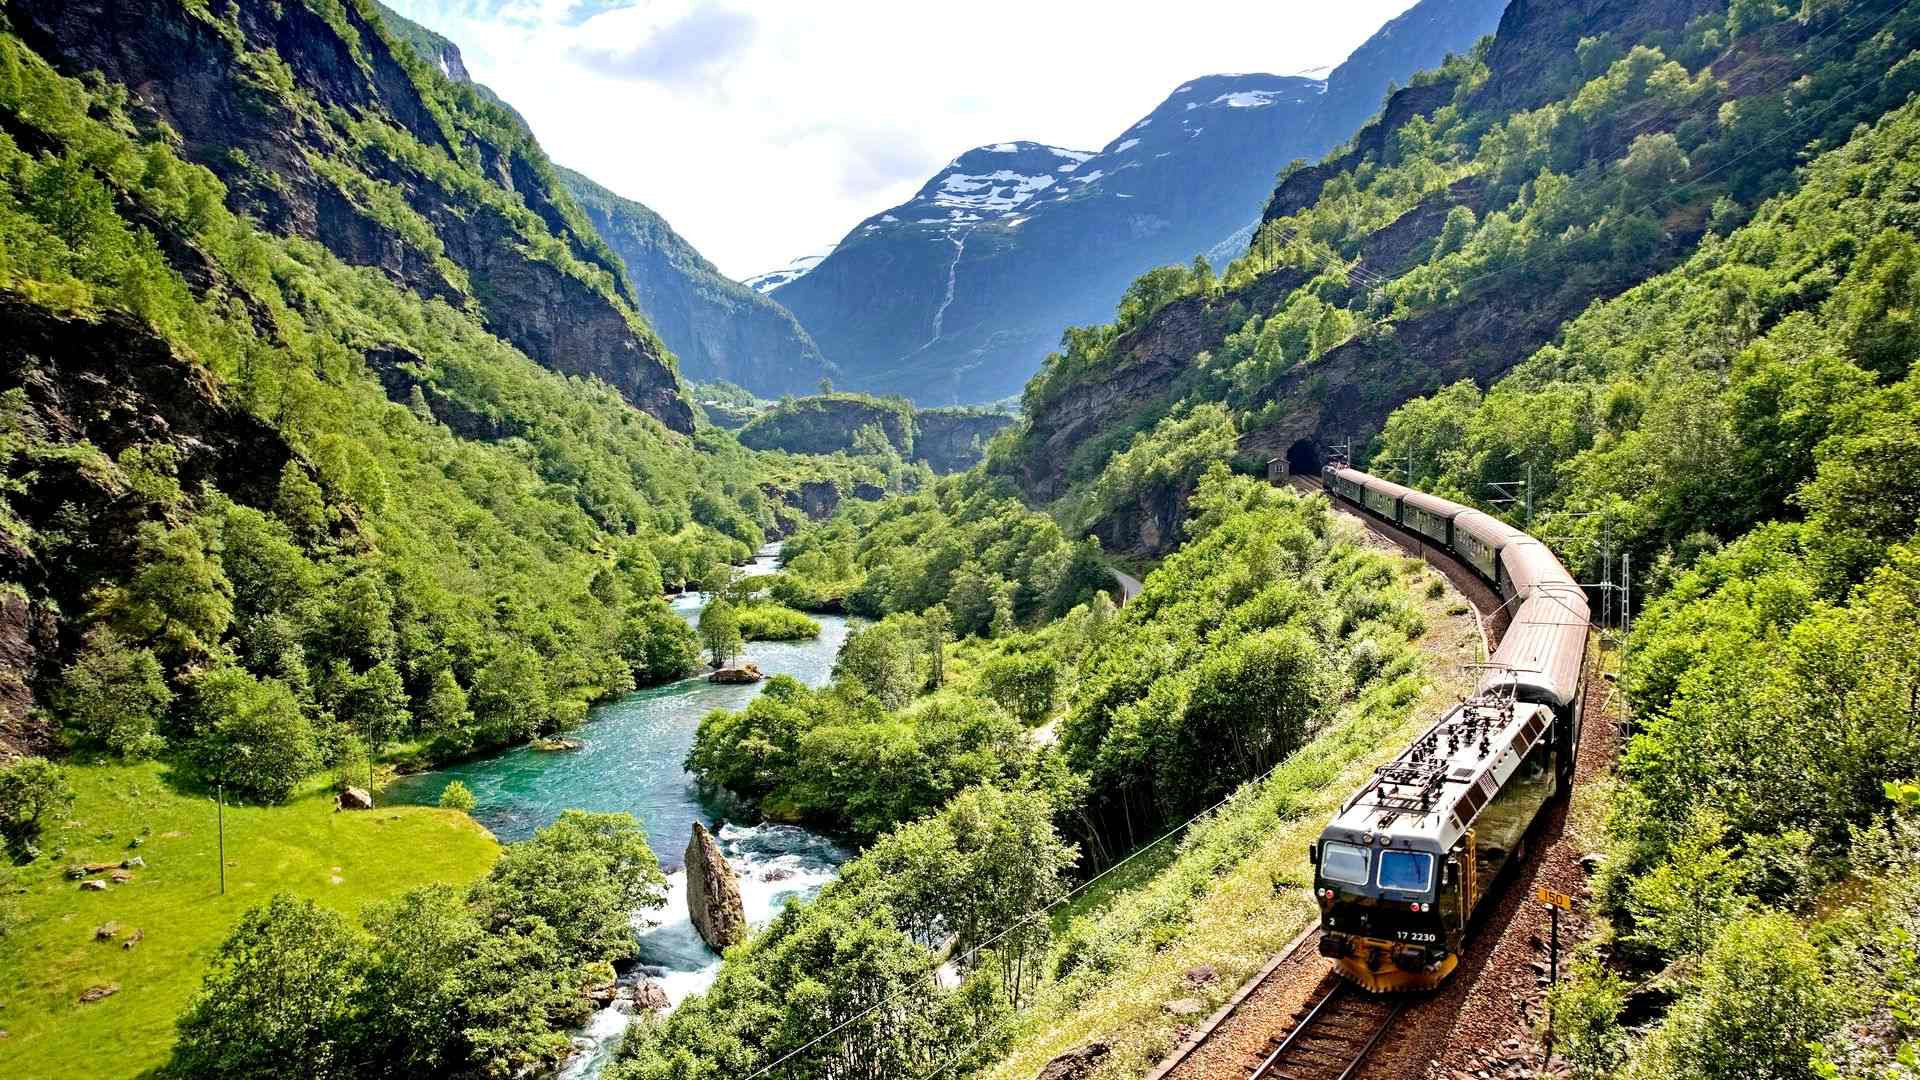 The Flåmsbana train in Norway